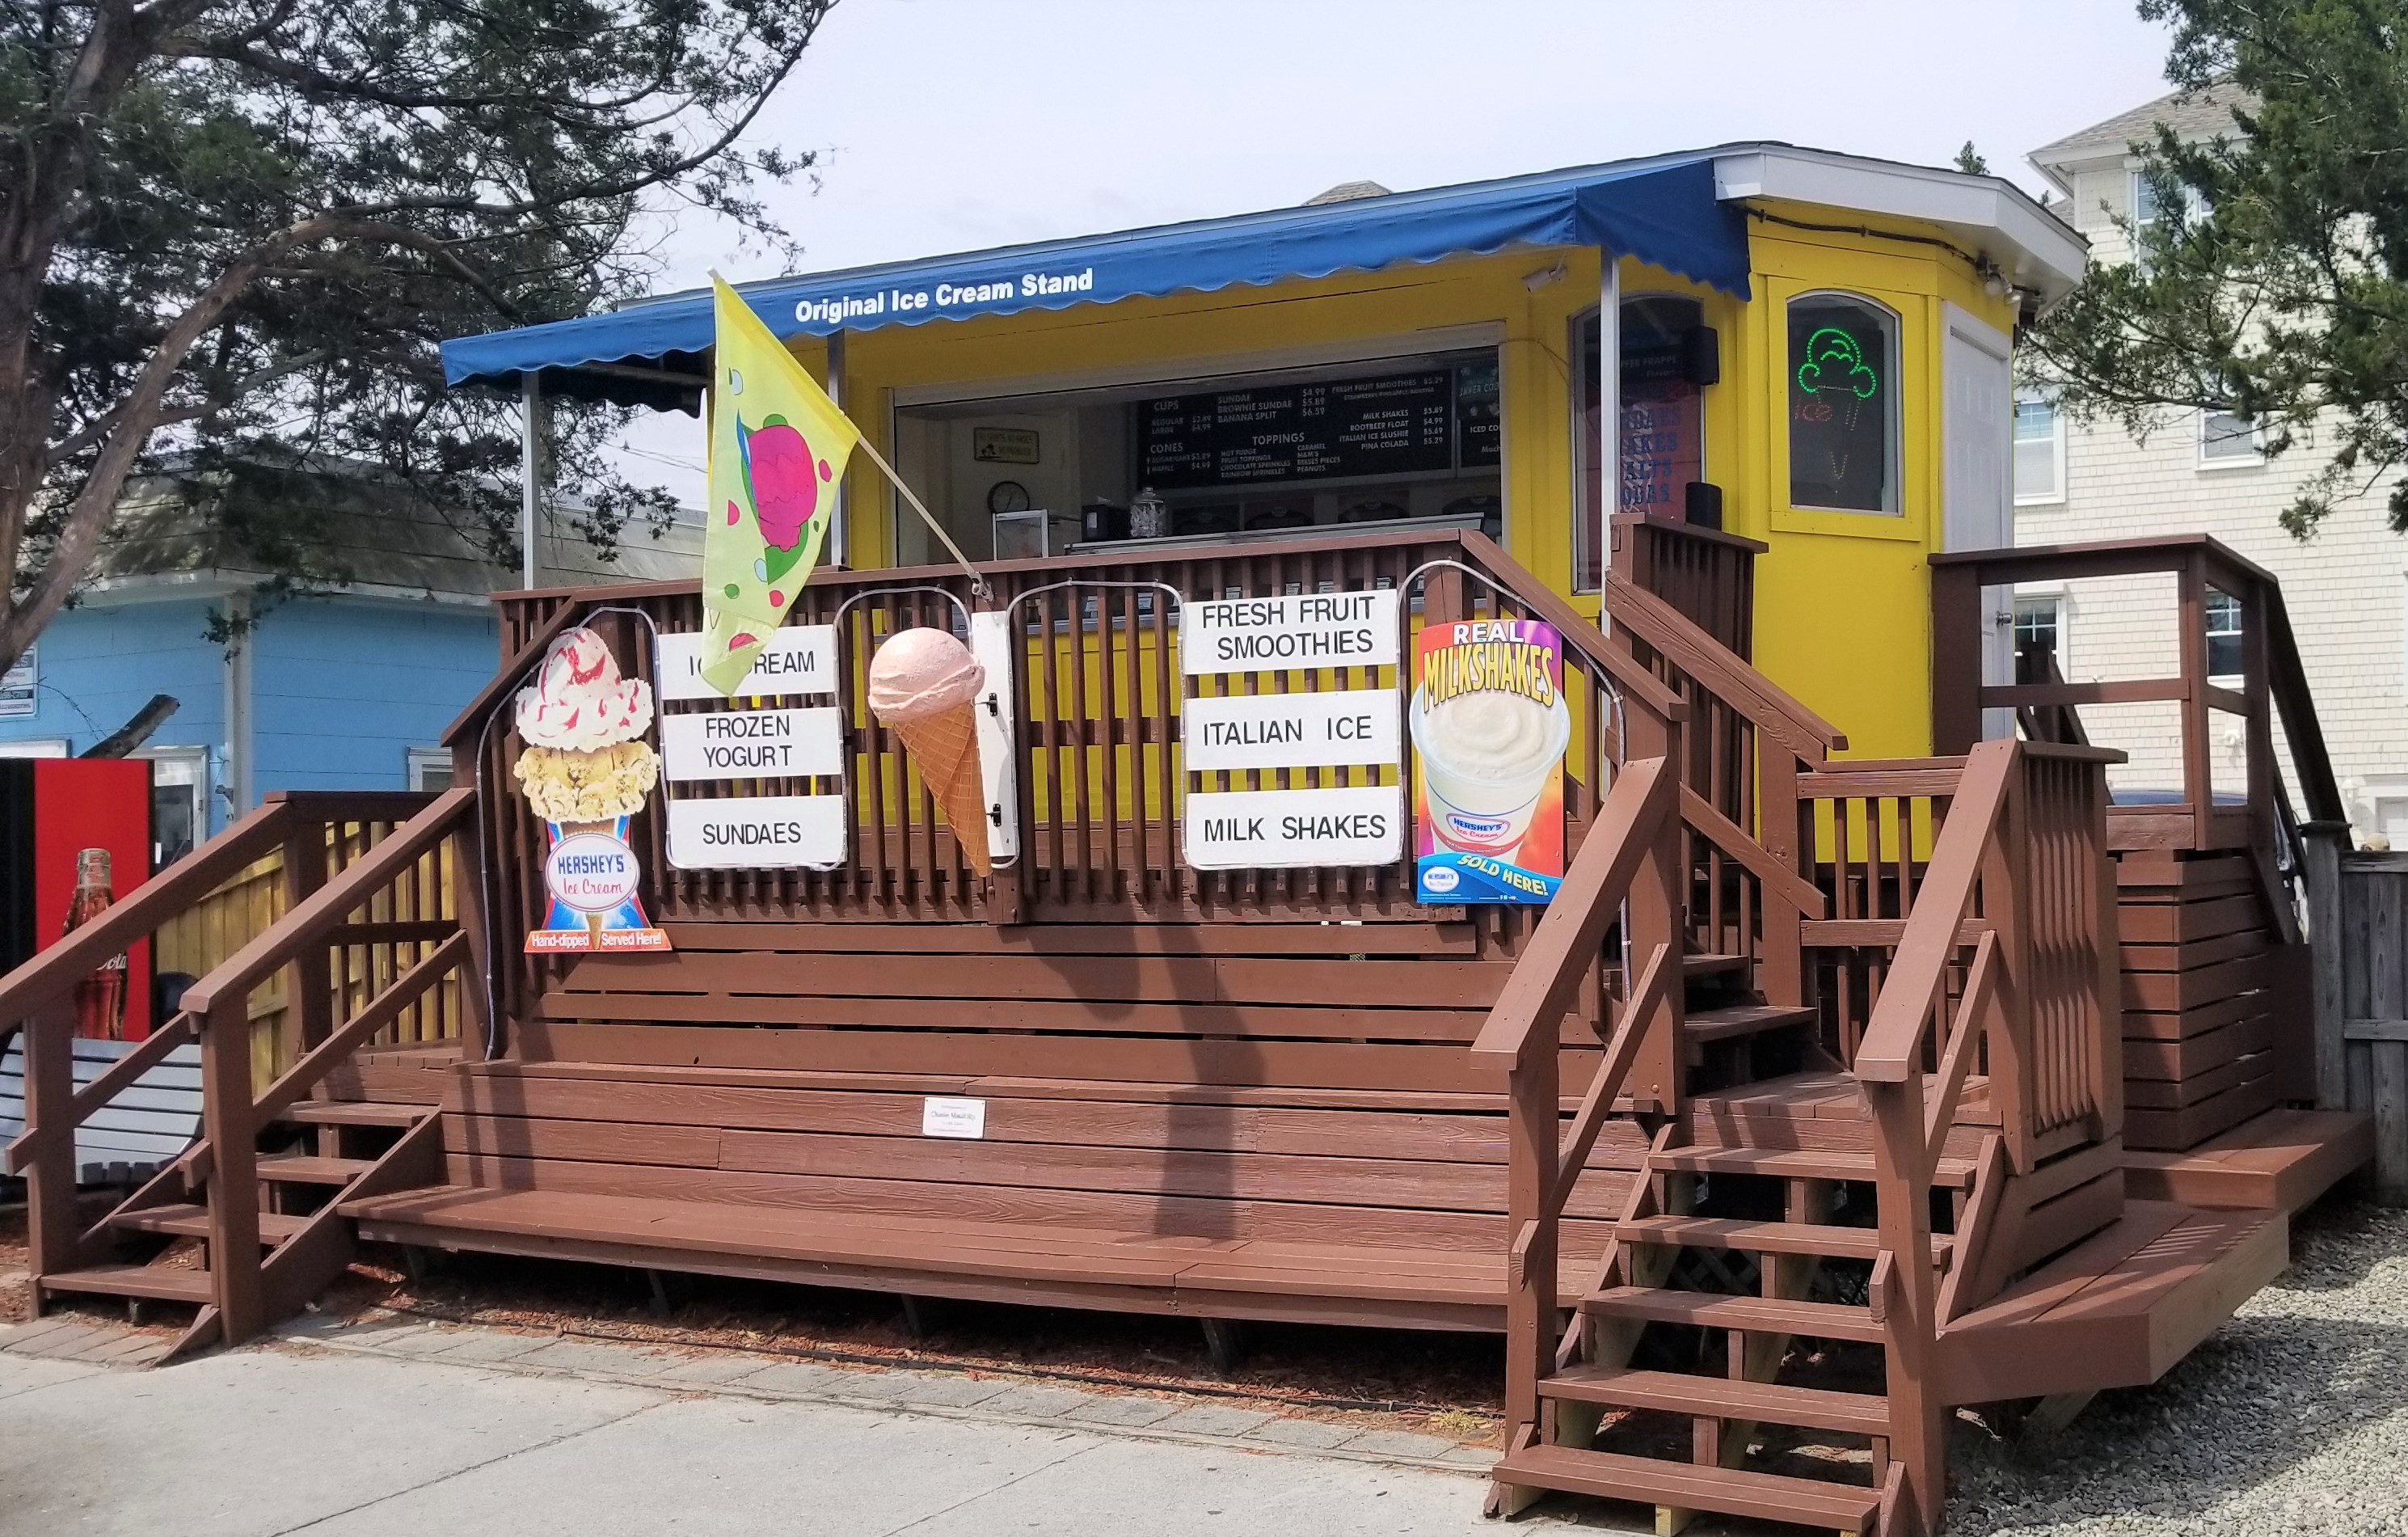 The Original Ice Cream Stand  Wrightsville Beach, NC 18480